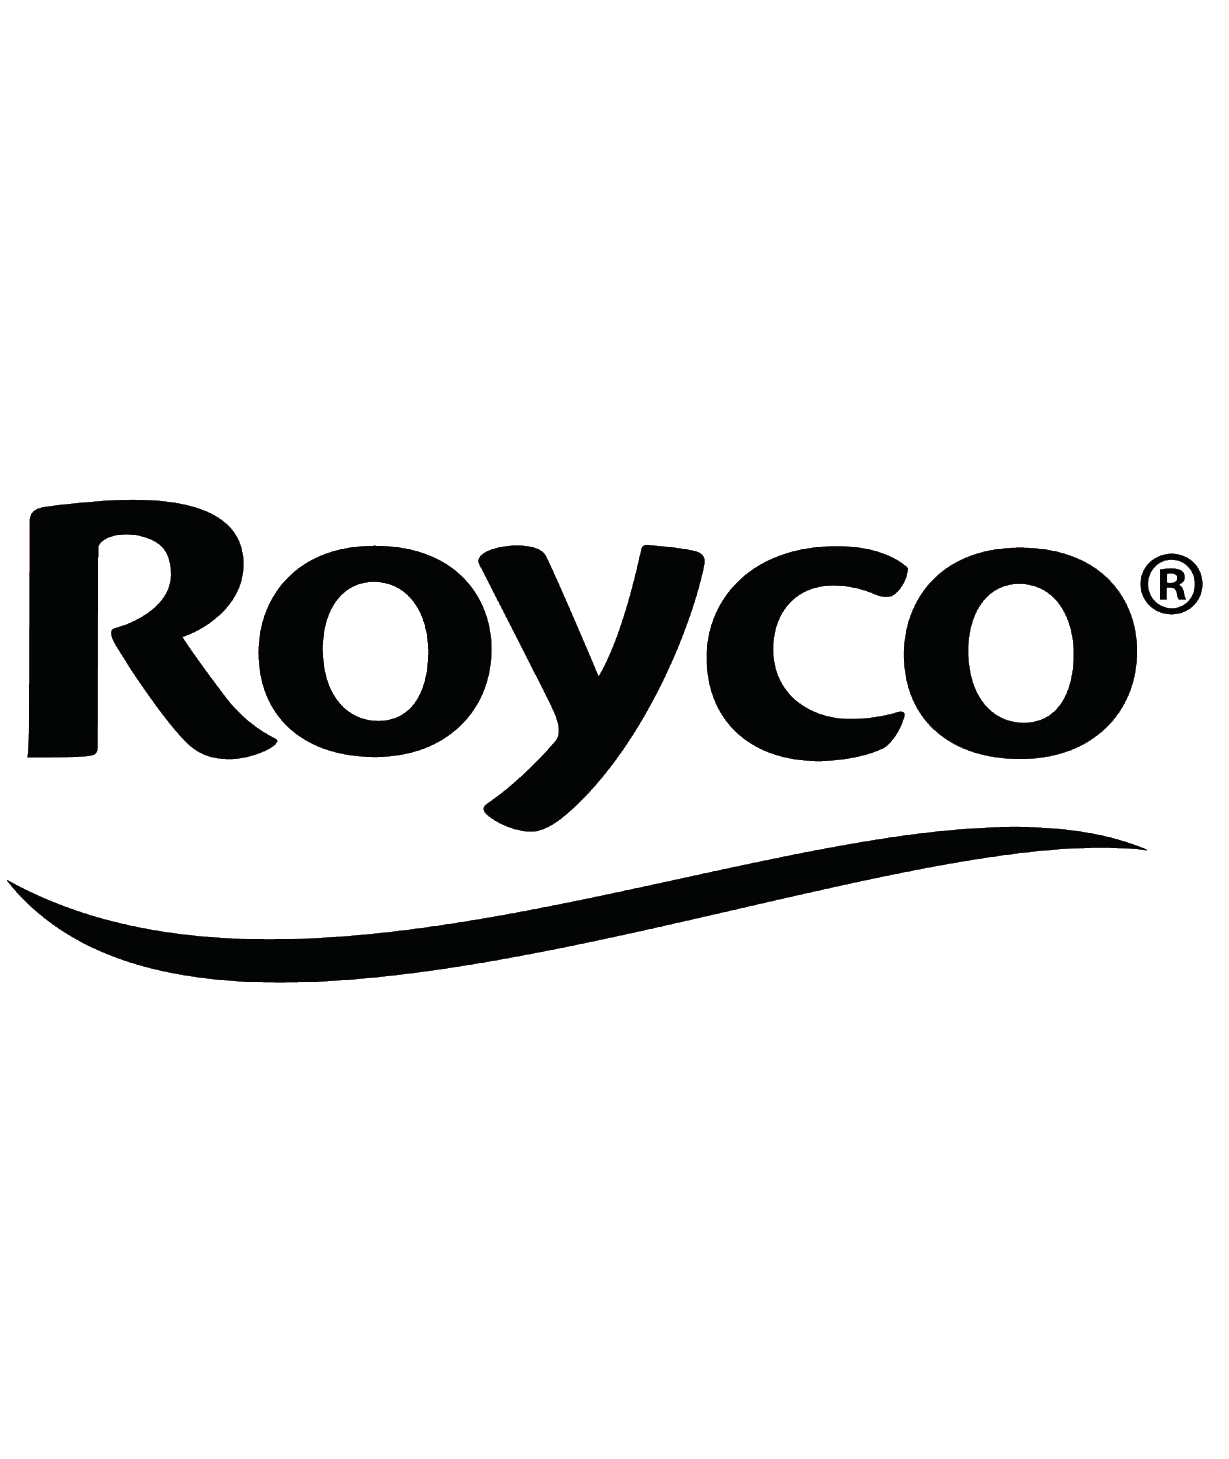 Royco logo